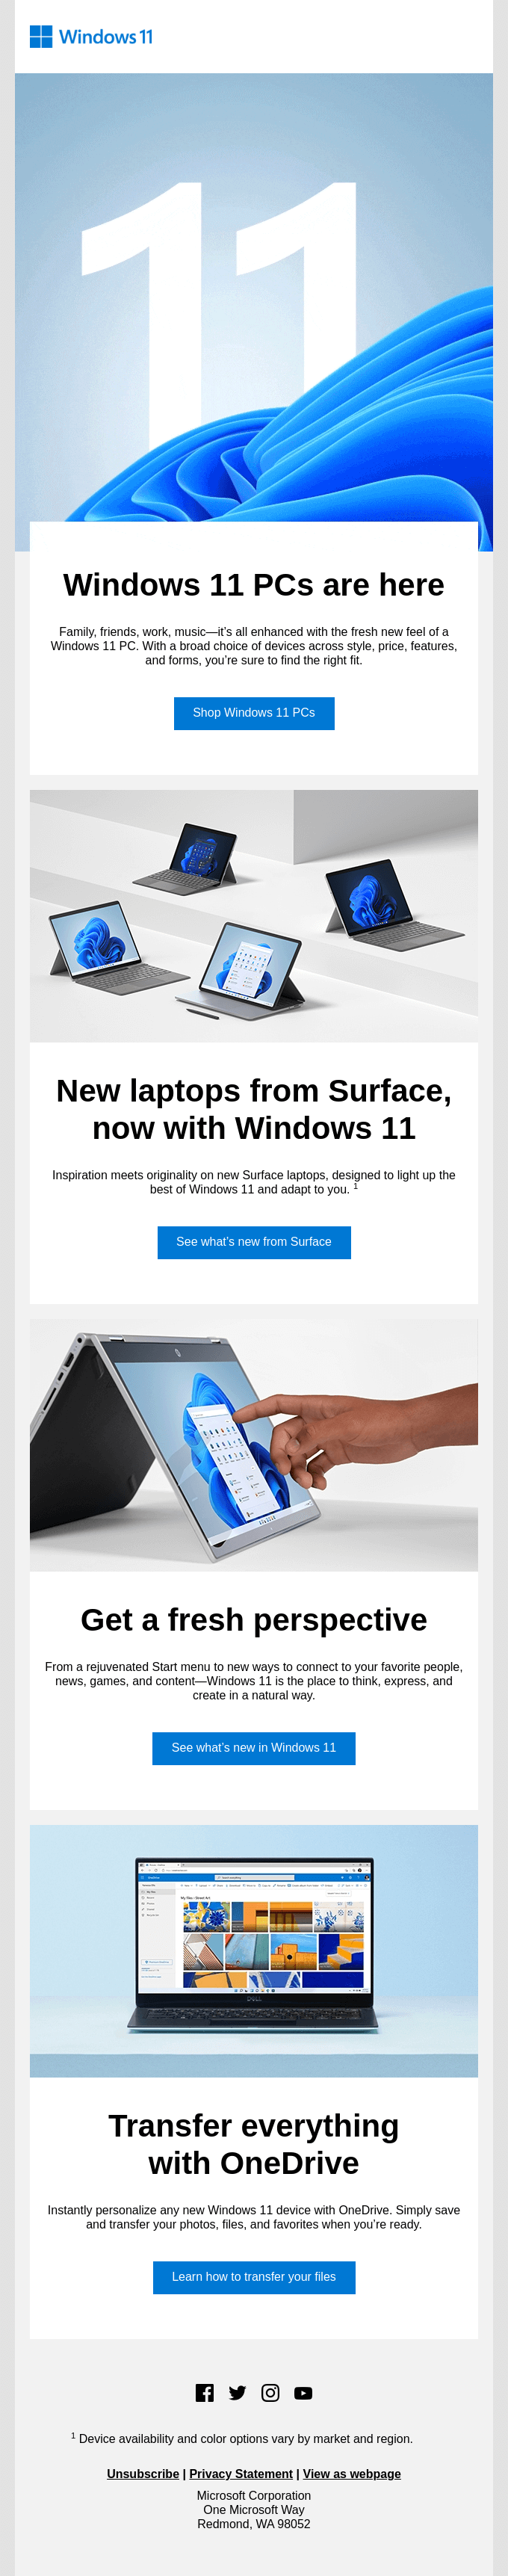 New Windows 11 PCs have arrived